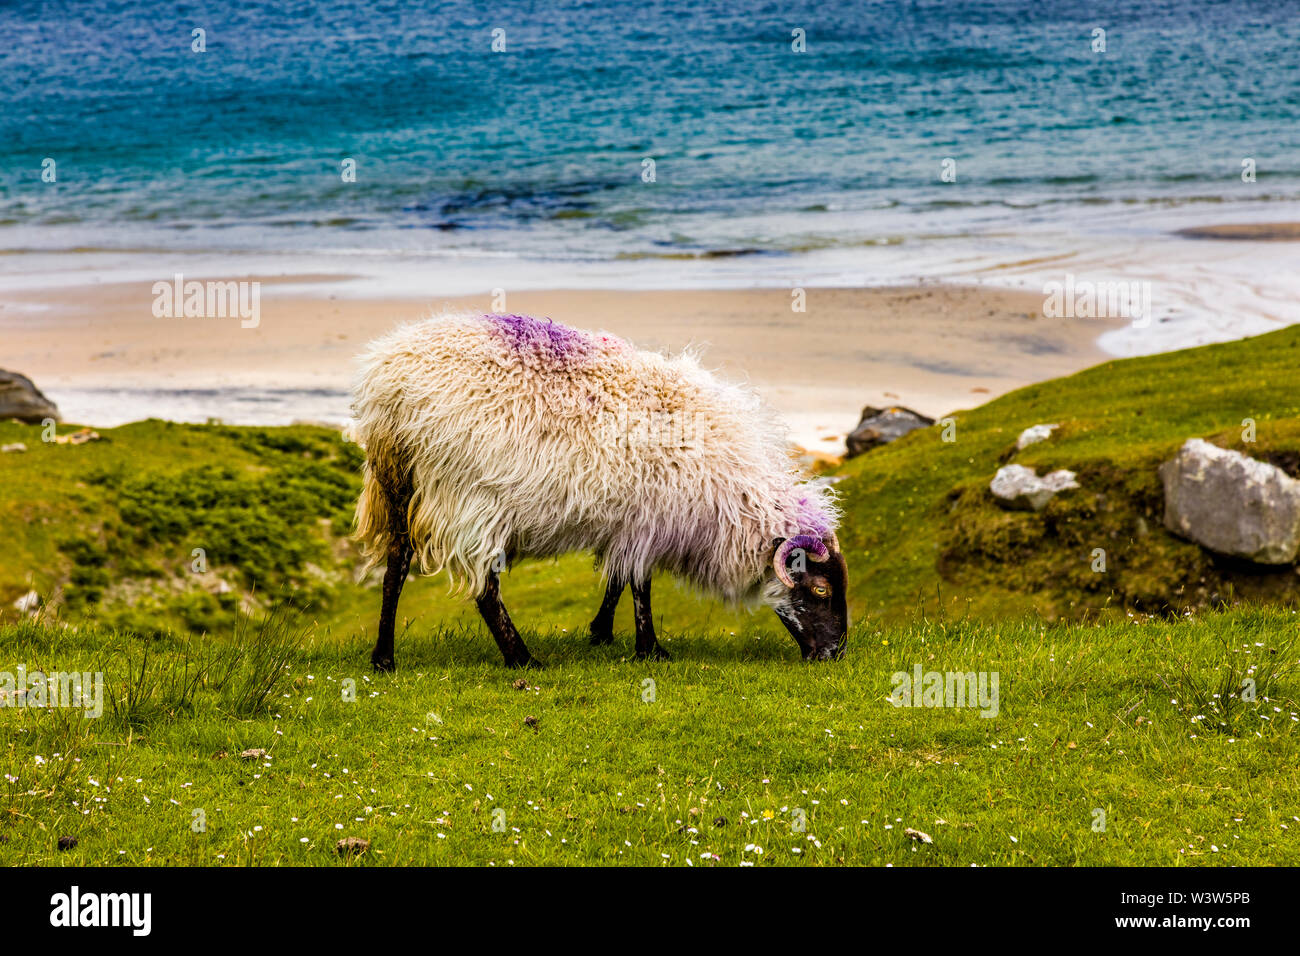 Sheep on Achill Island in County Mayo Ireland Stock Photo